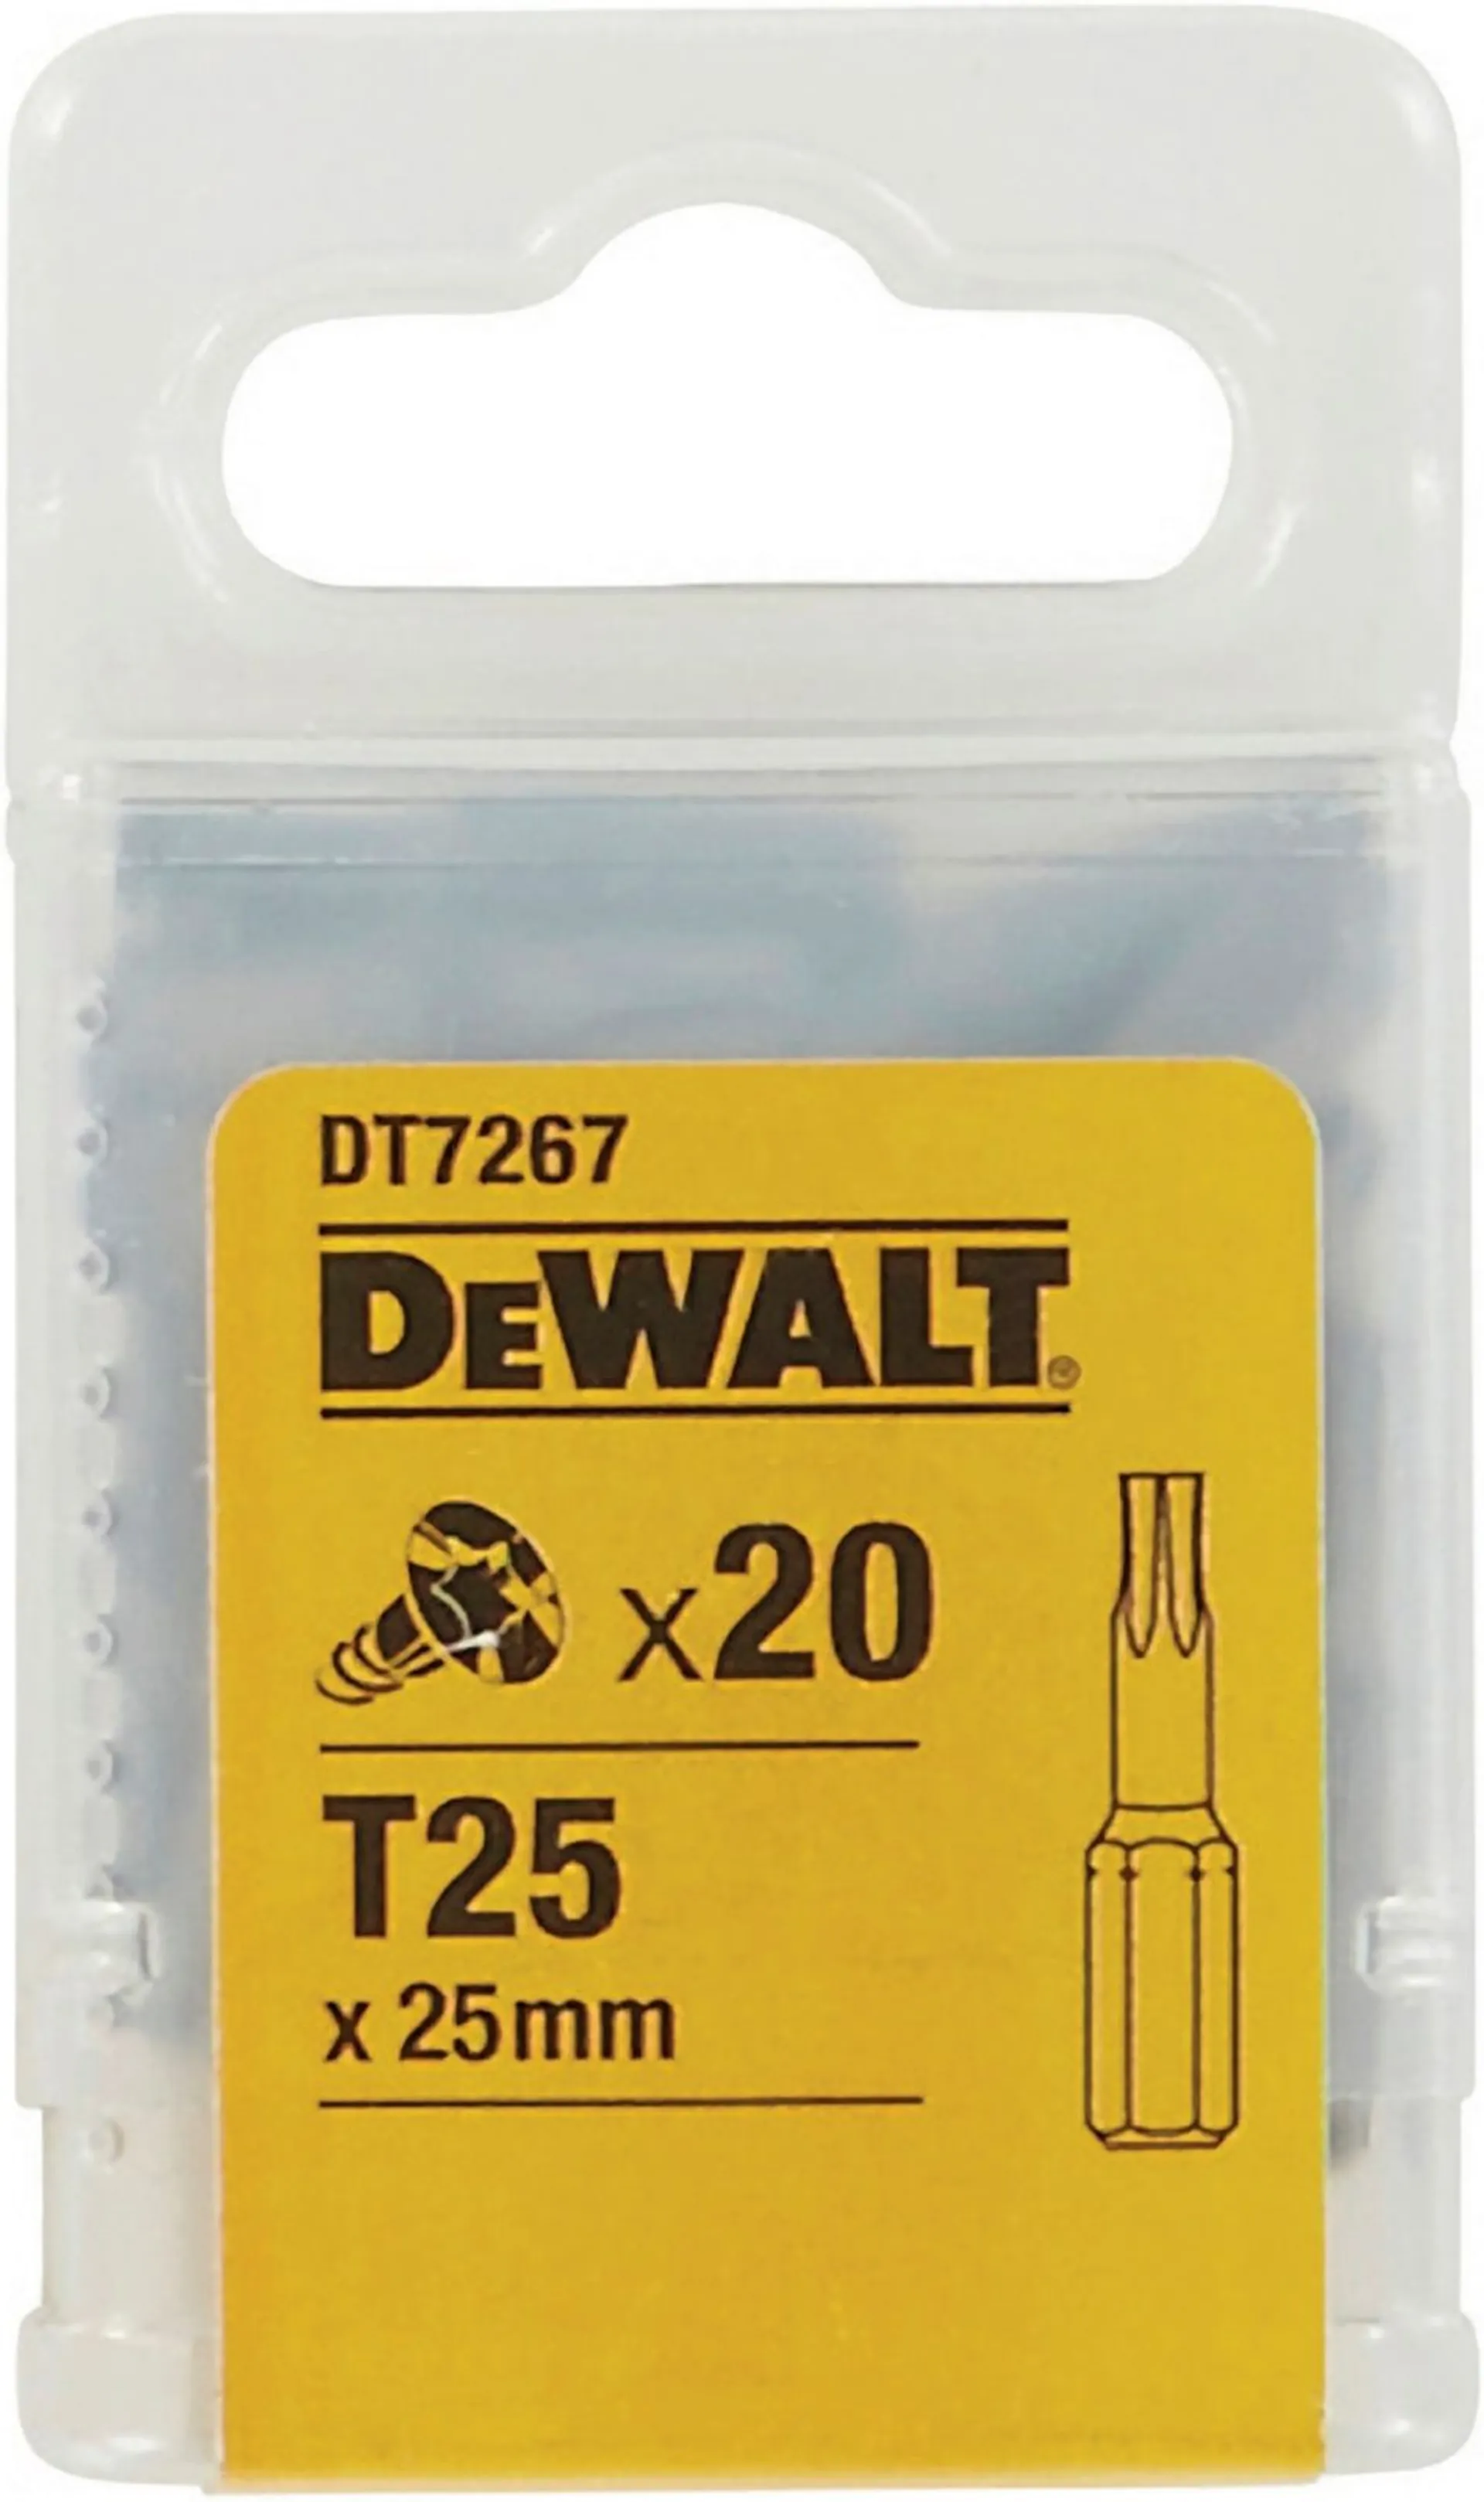 Ruuvauskärkiä Torx-ruuveille DEWALT DT7267 25 mm, T25, 20 kpl